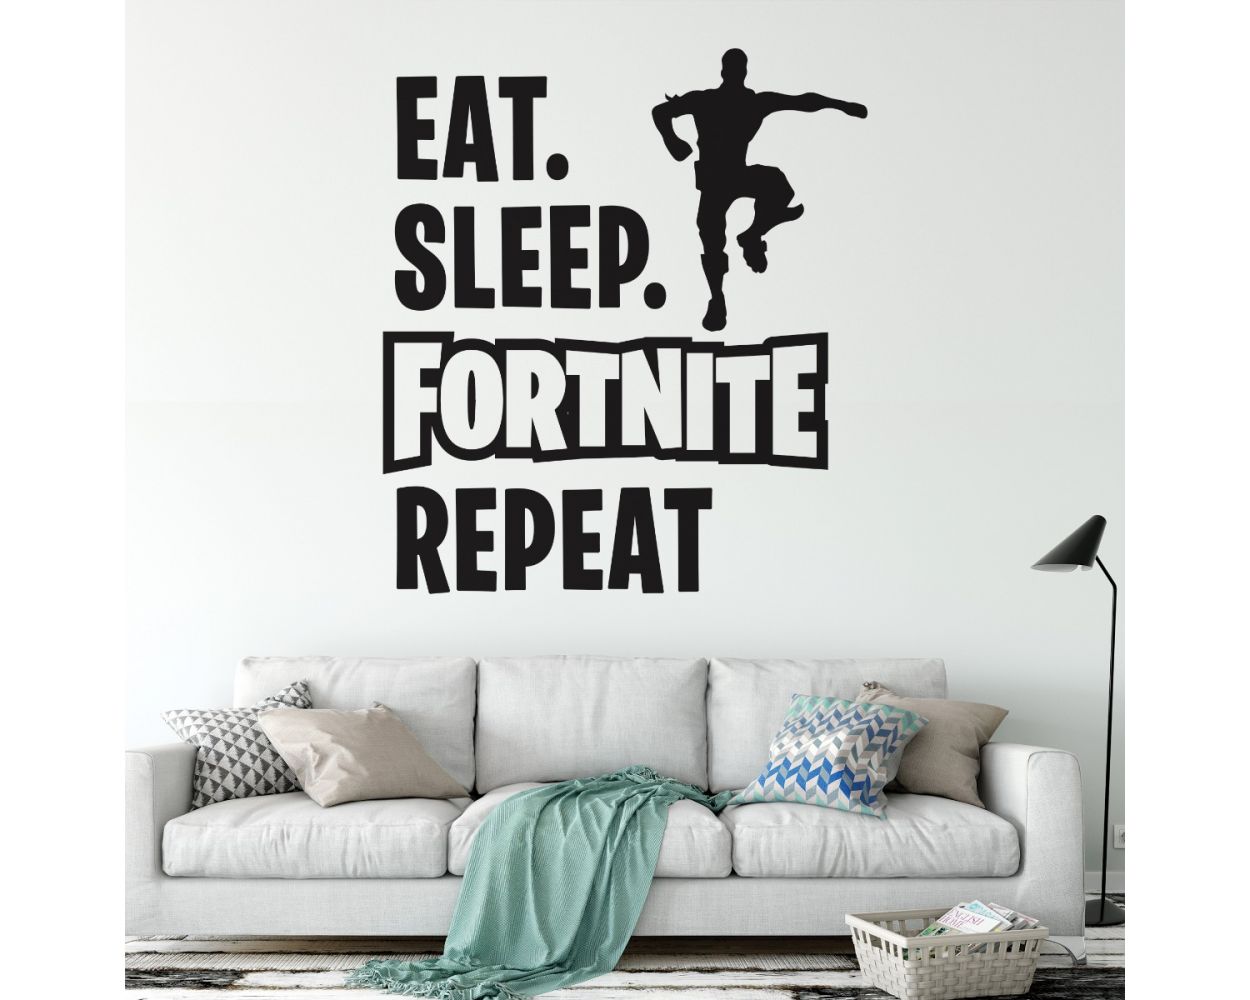 Fortnite Teen Boy's Room Game Room Movie Room Wall Decal Eat Sleep Play Fortnite 